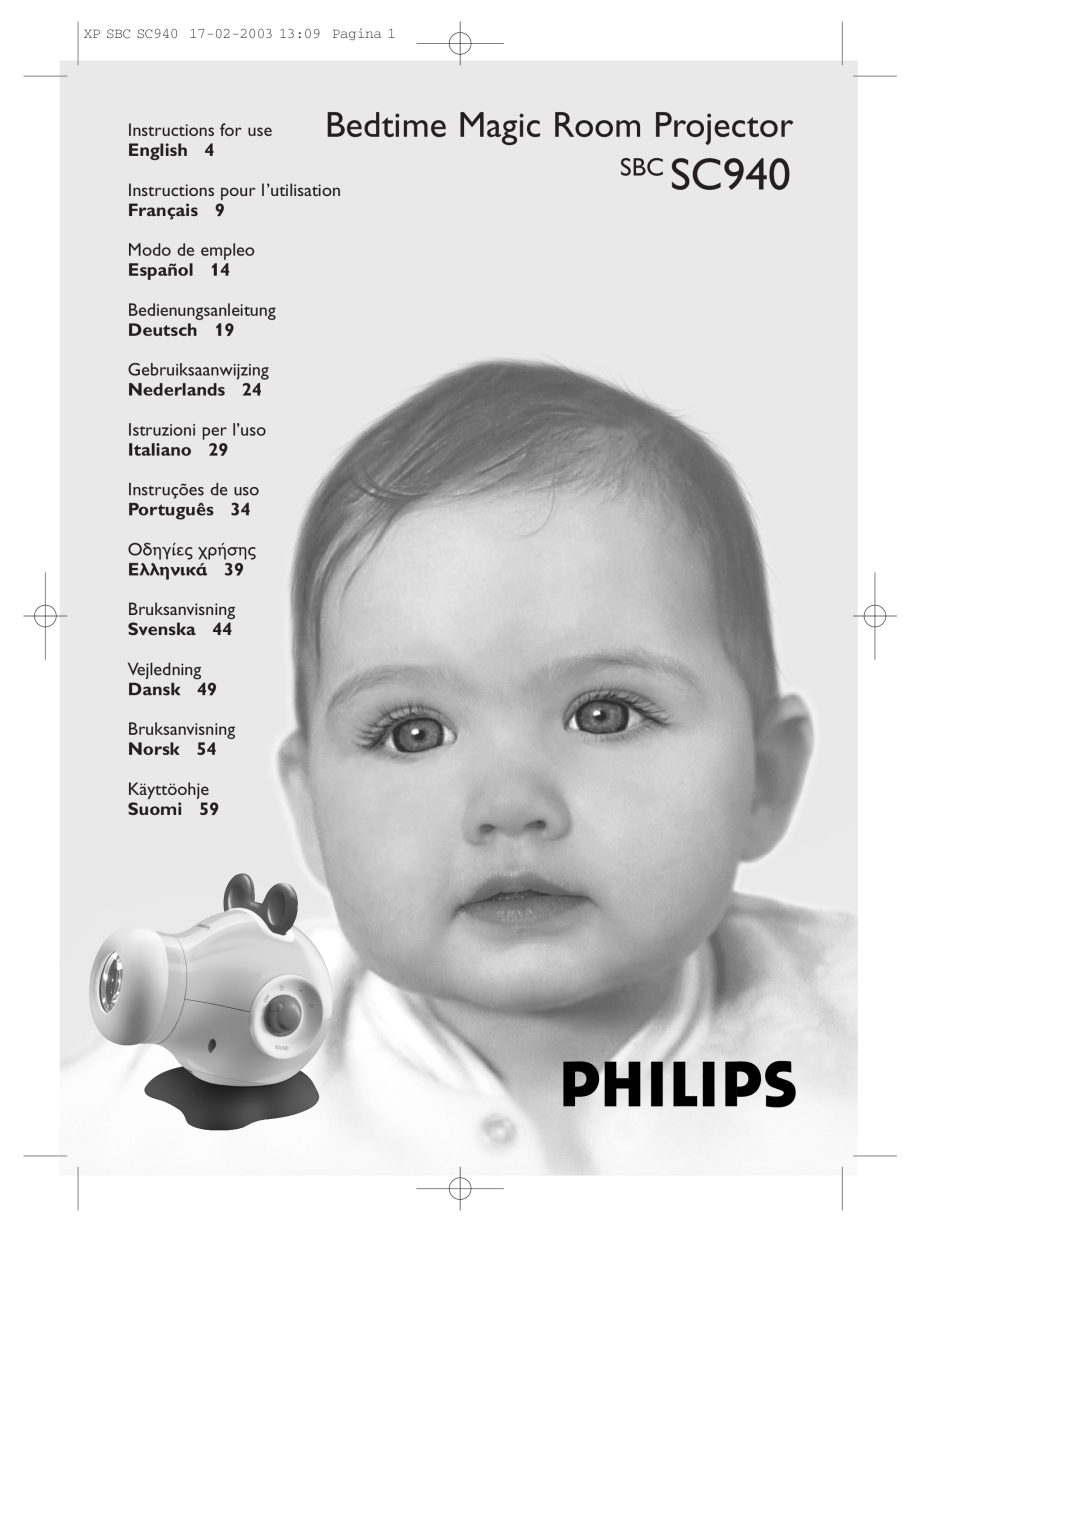 Philips SBC SC940 manual Instructions for use Bedtime Magic Room Projector, English, Français, Español, Deutsch, Italiano 